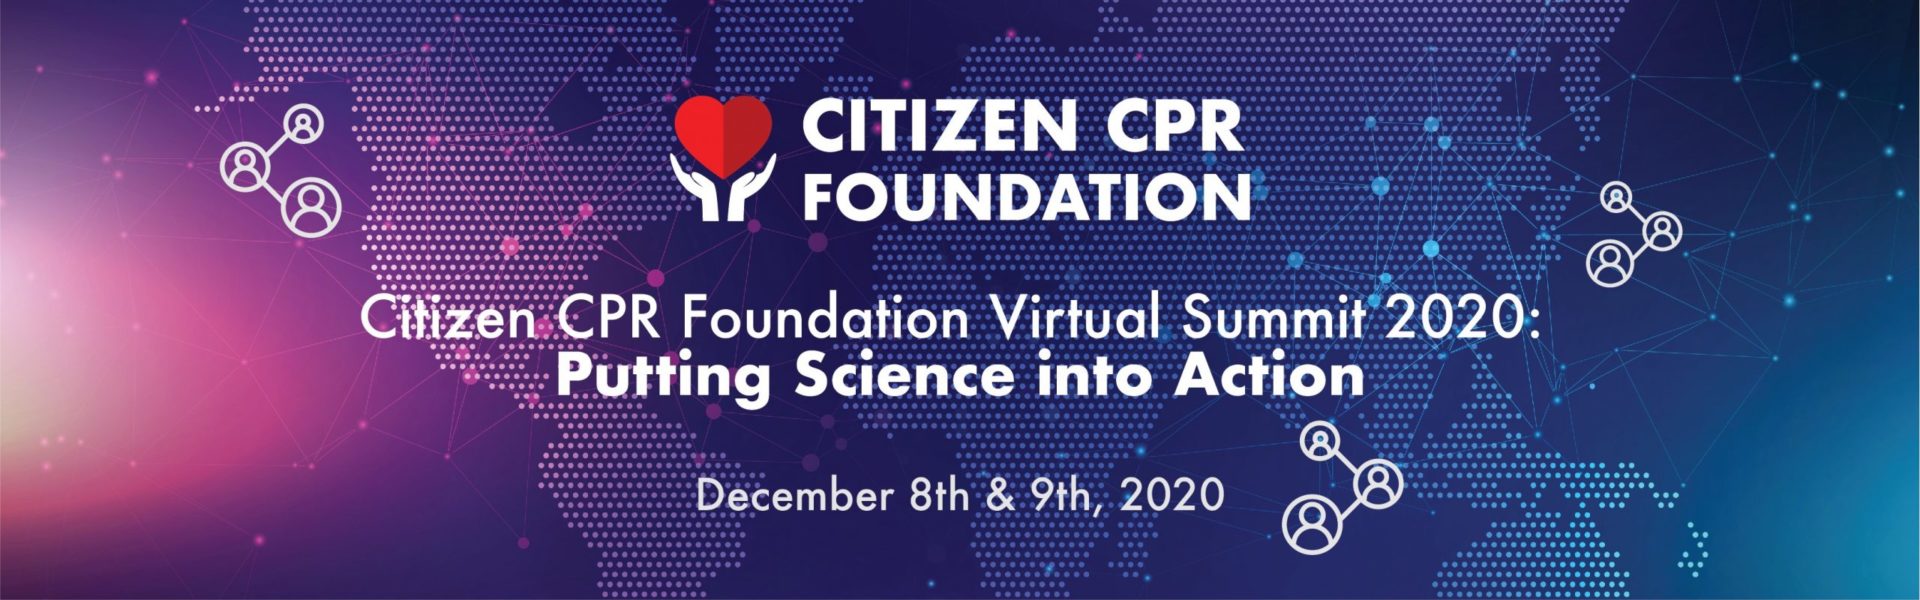 citizen cpr foundation